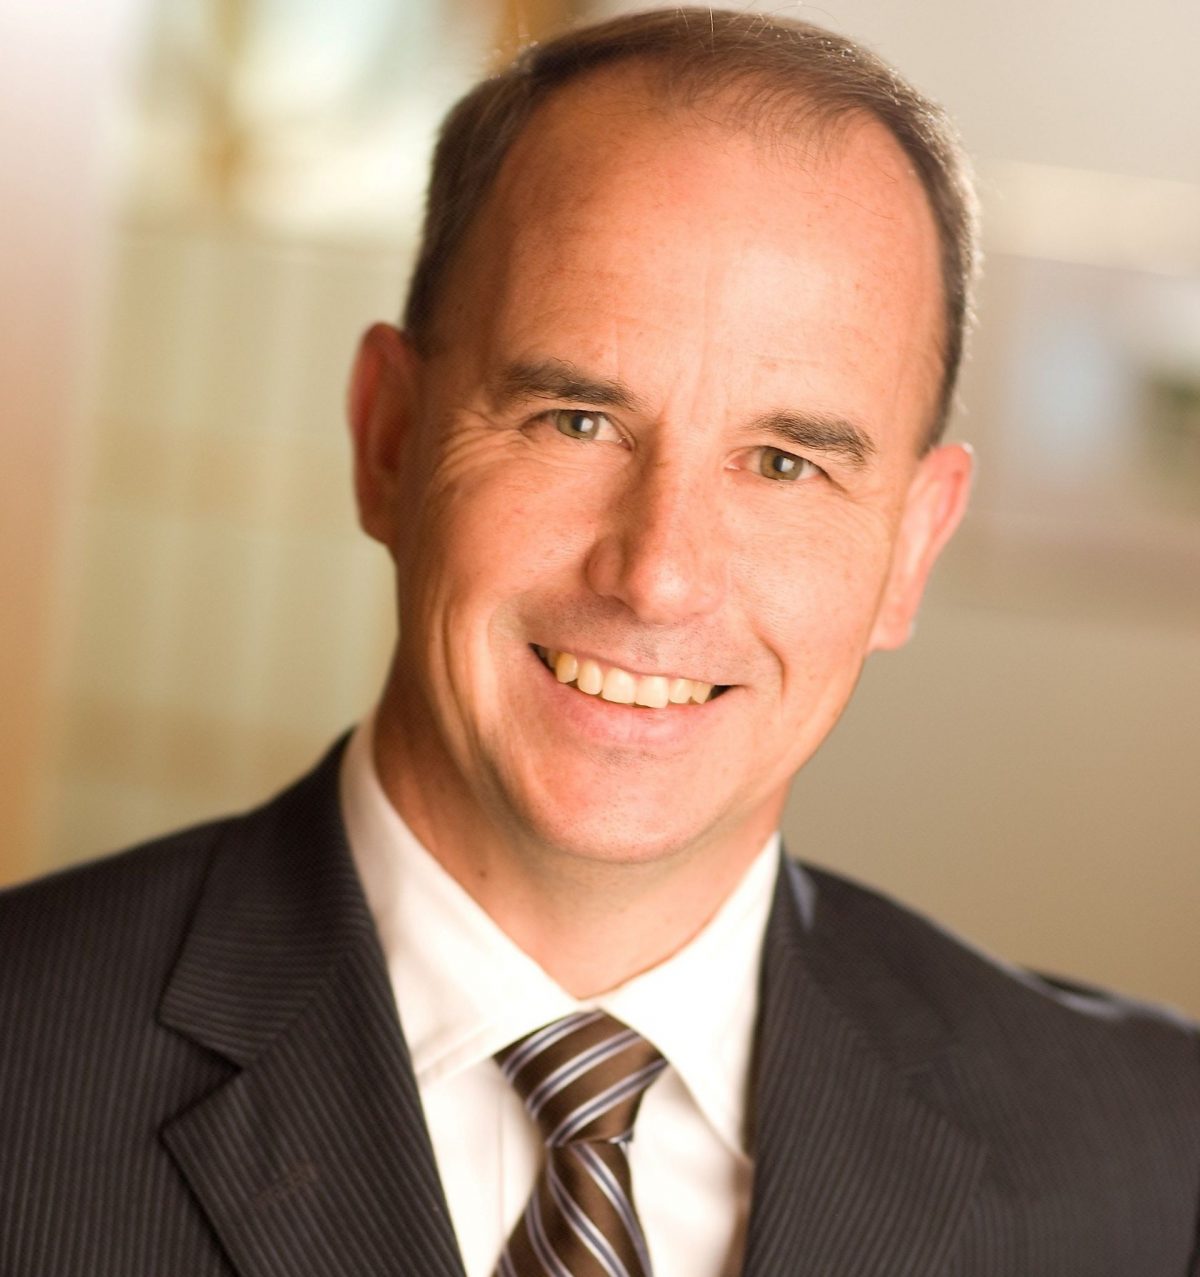 President and CEO of Methanex, John Floren